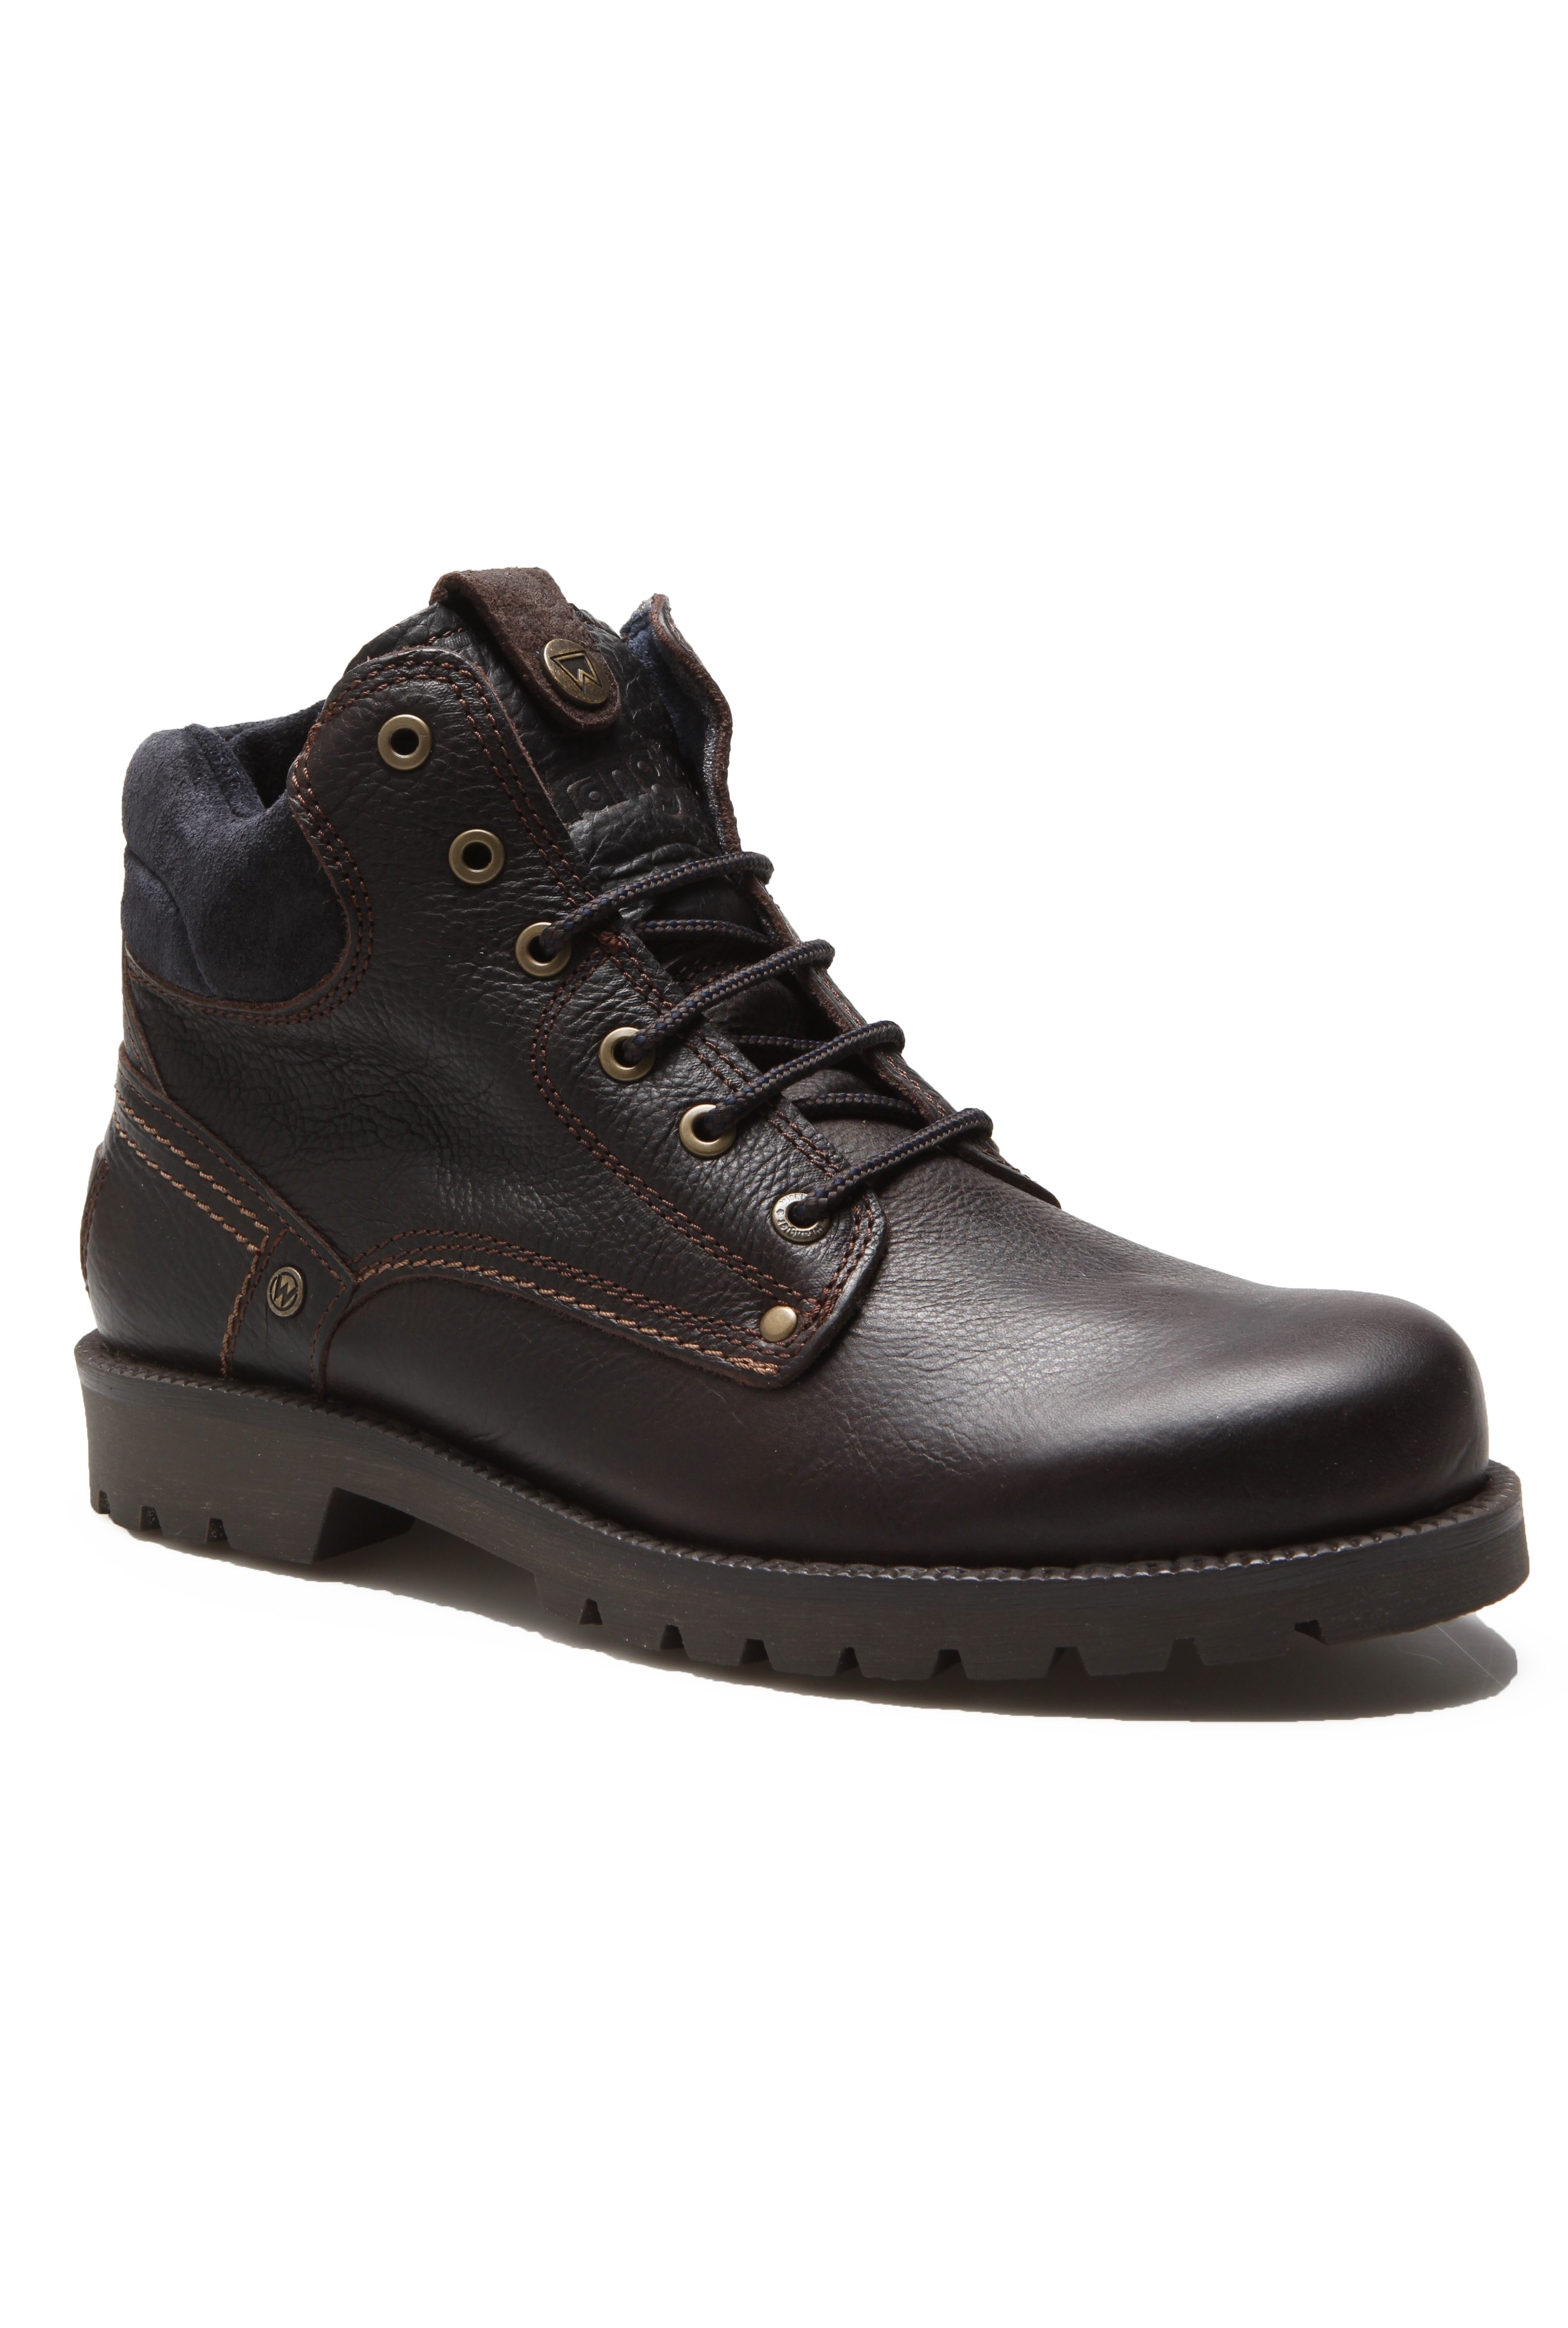 Wrangler Mens Newton Yuma Leather Boots Dark Brown Shoes | Jean Scene